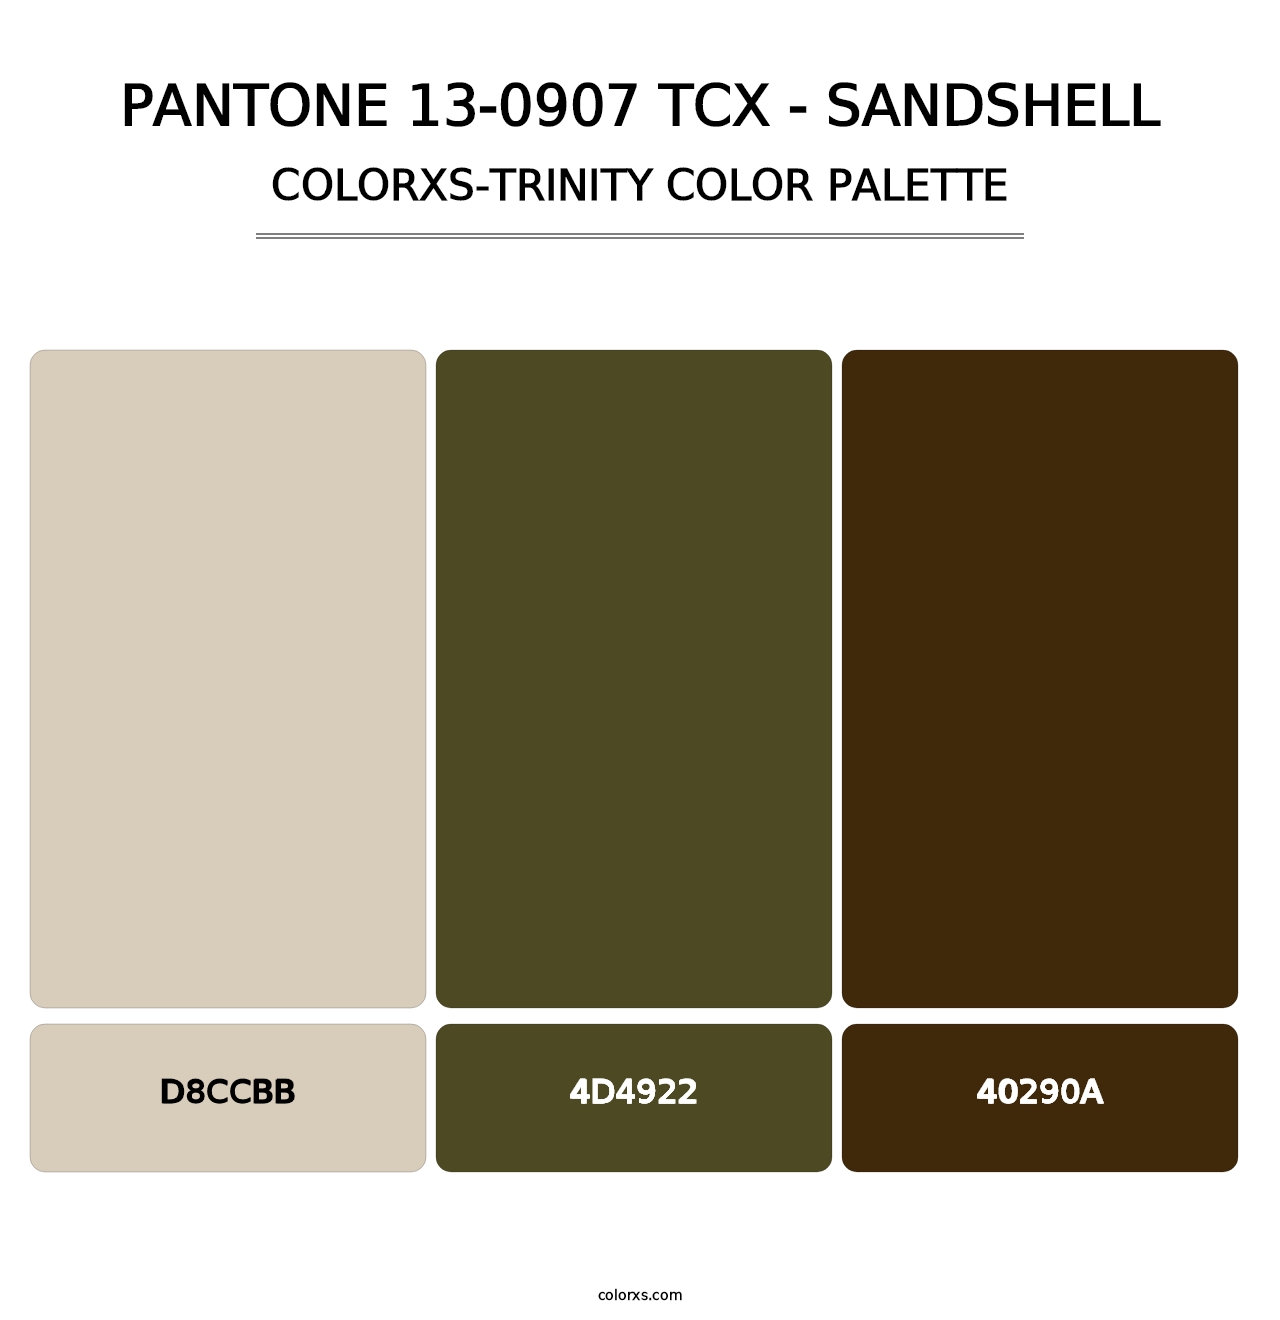 PANTONE 13-0907 TCX - Sandshell - Colorxs Trinity Palette